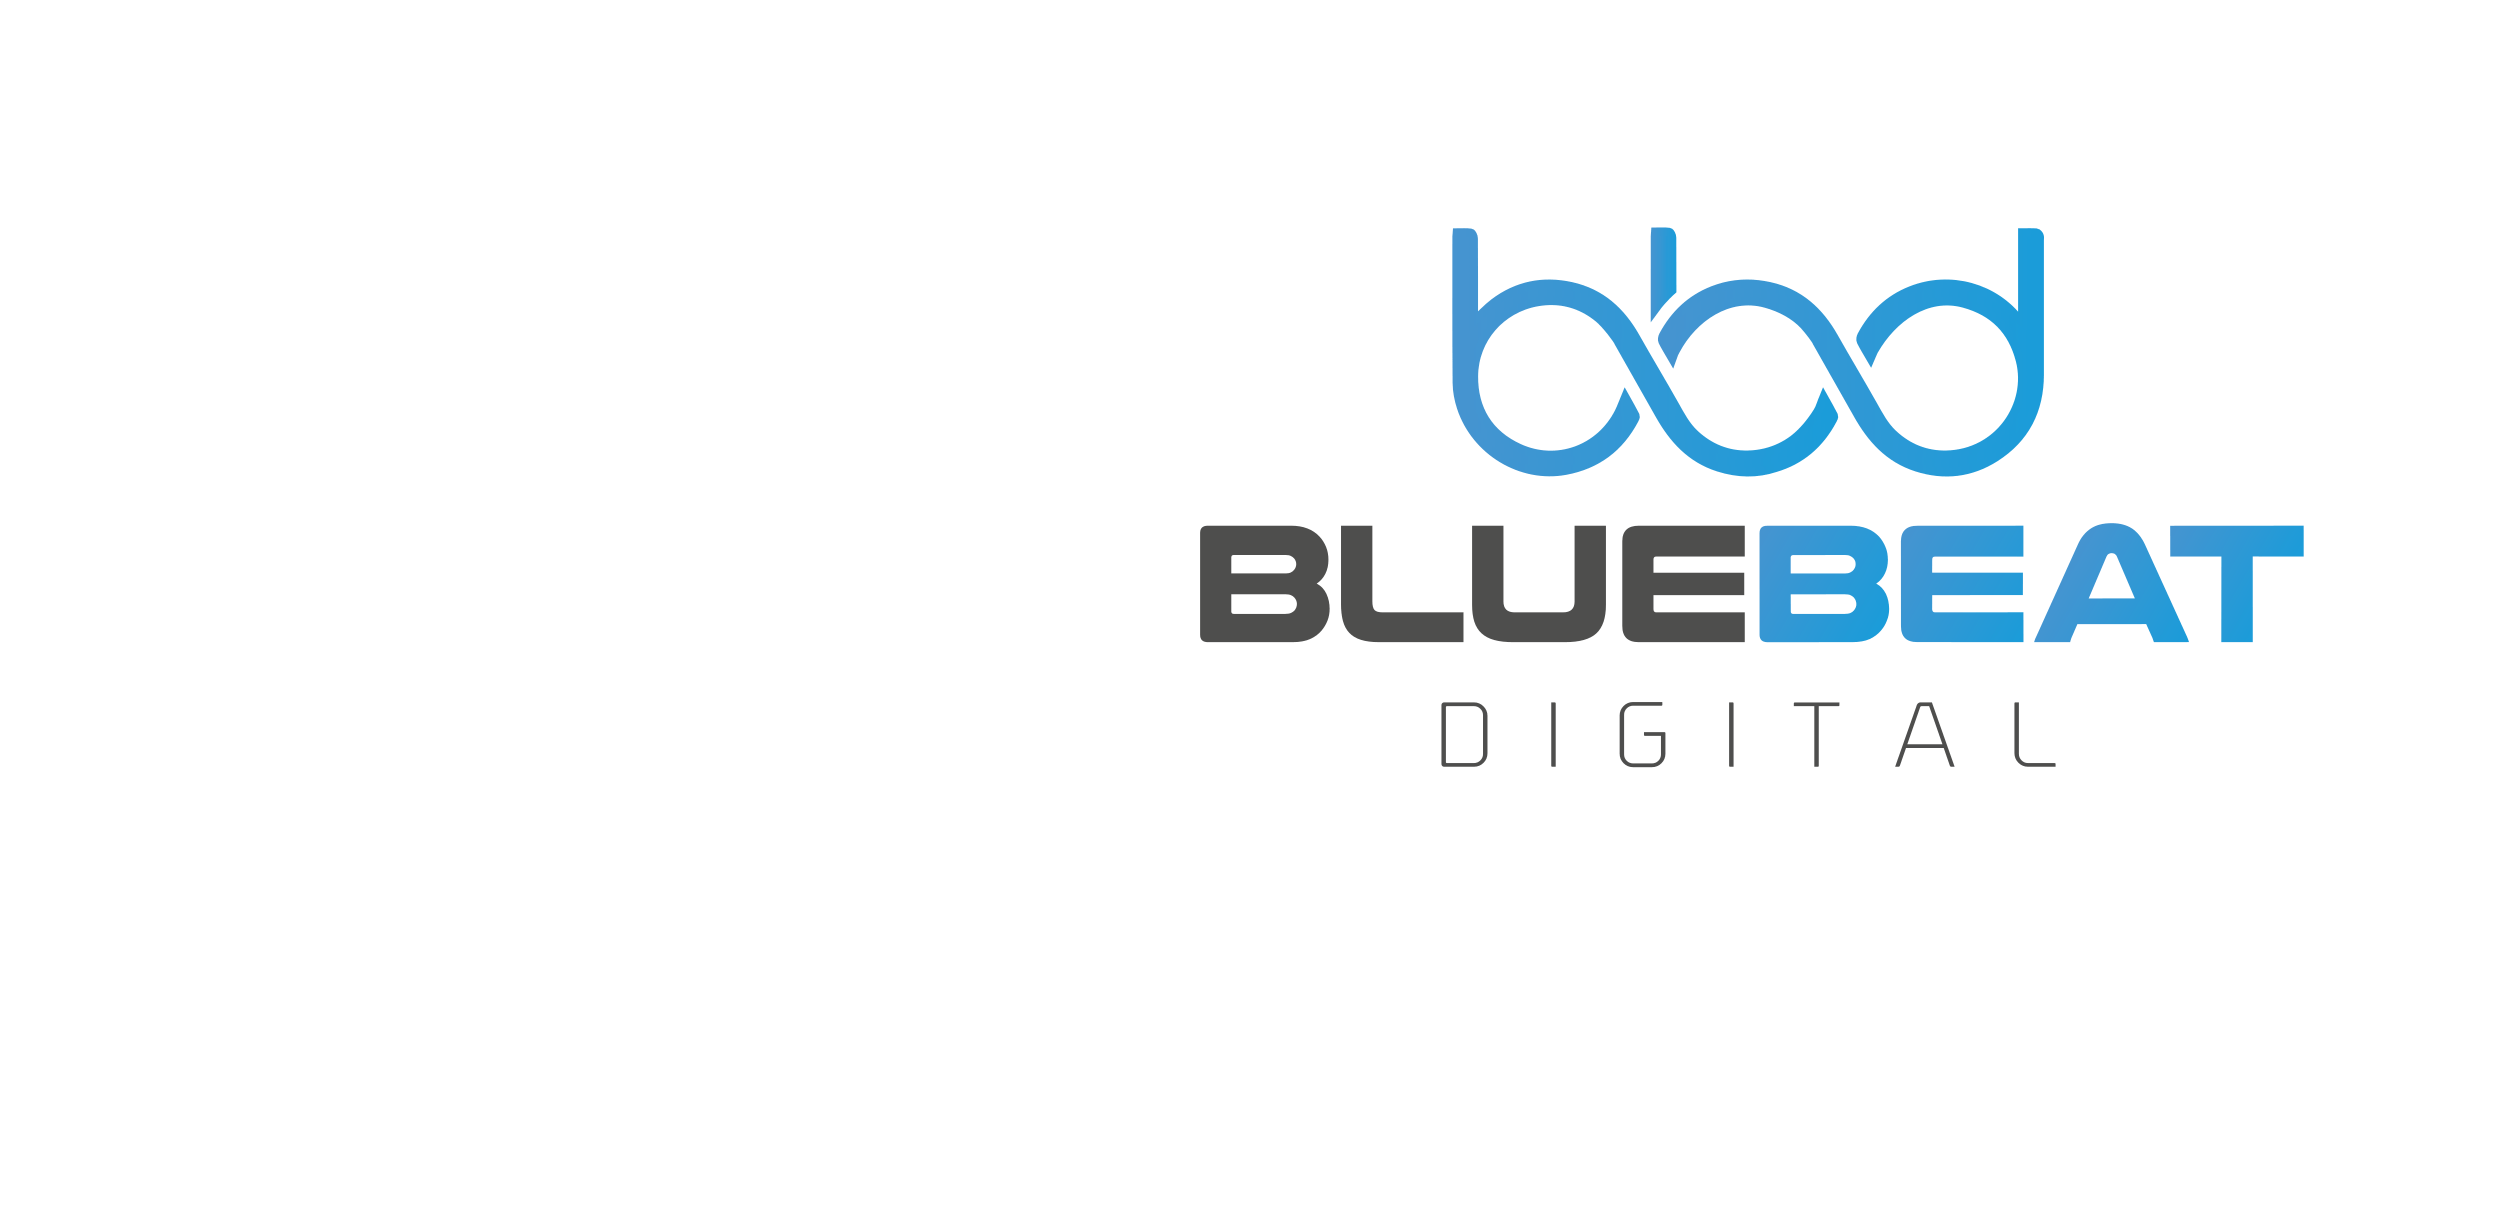 Barry Taitz blue beat digital logo